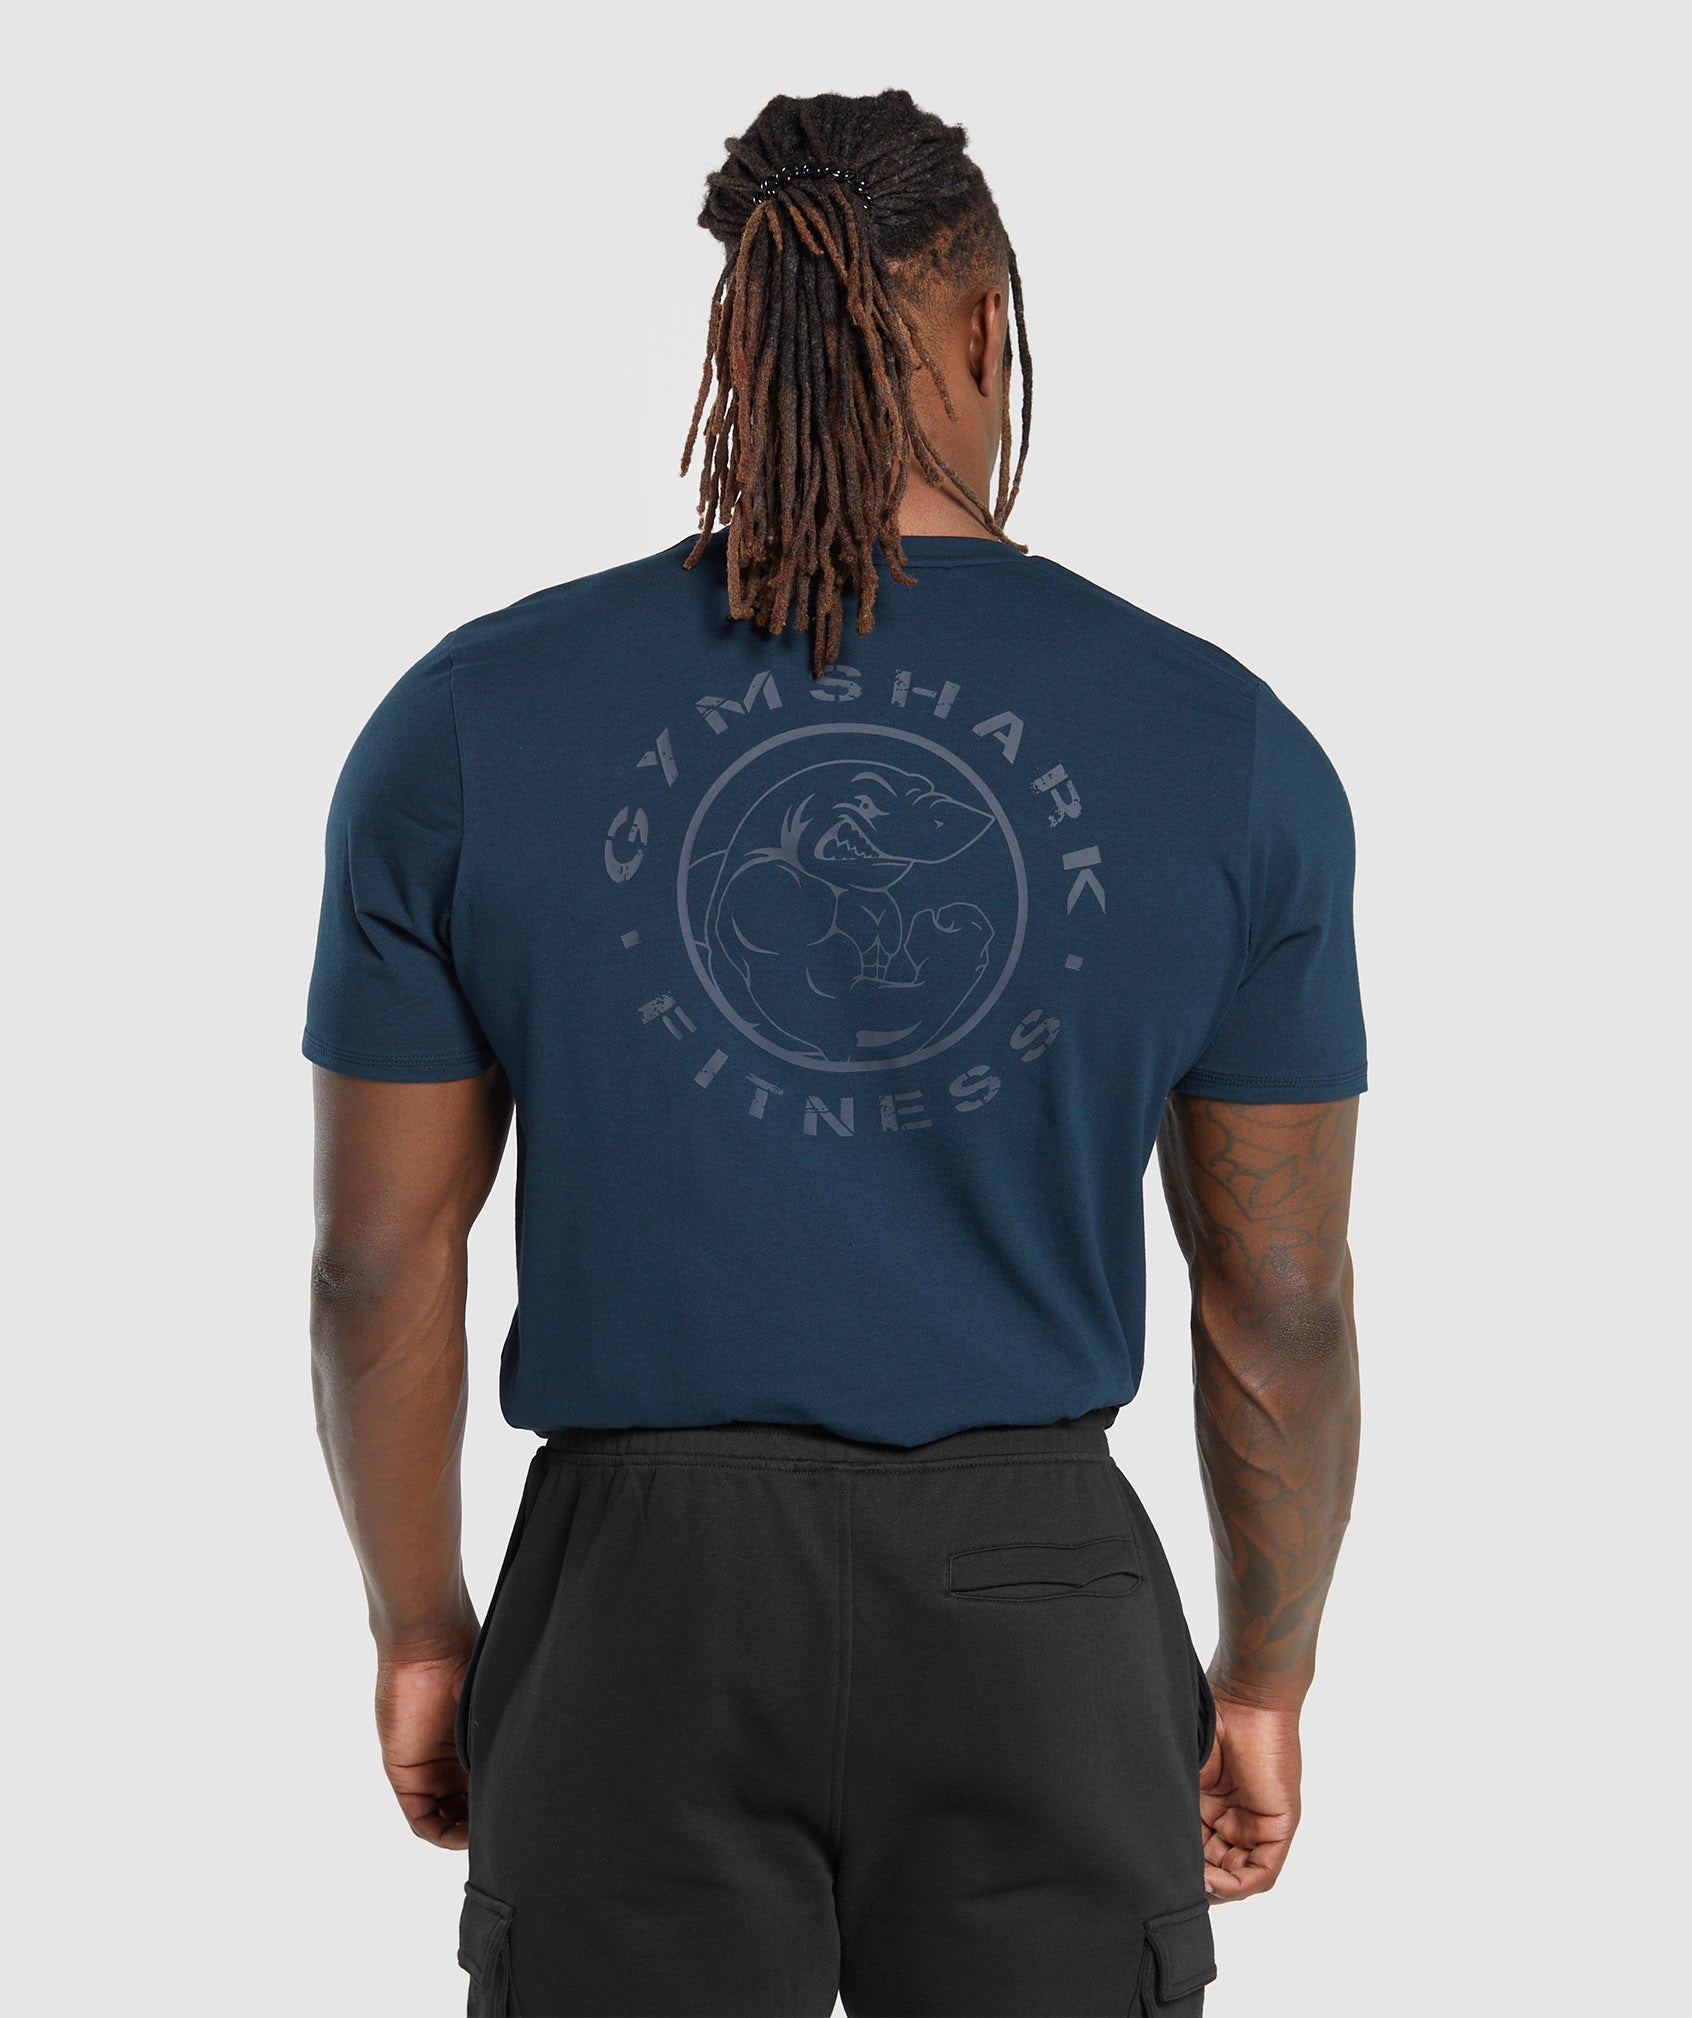 Camiseta Gymshark Hombre Economicas - Power Negros